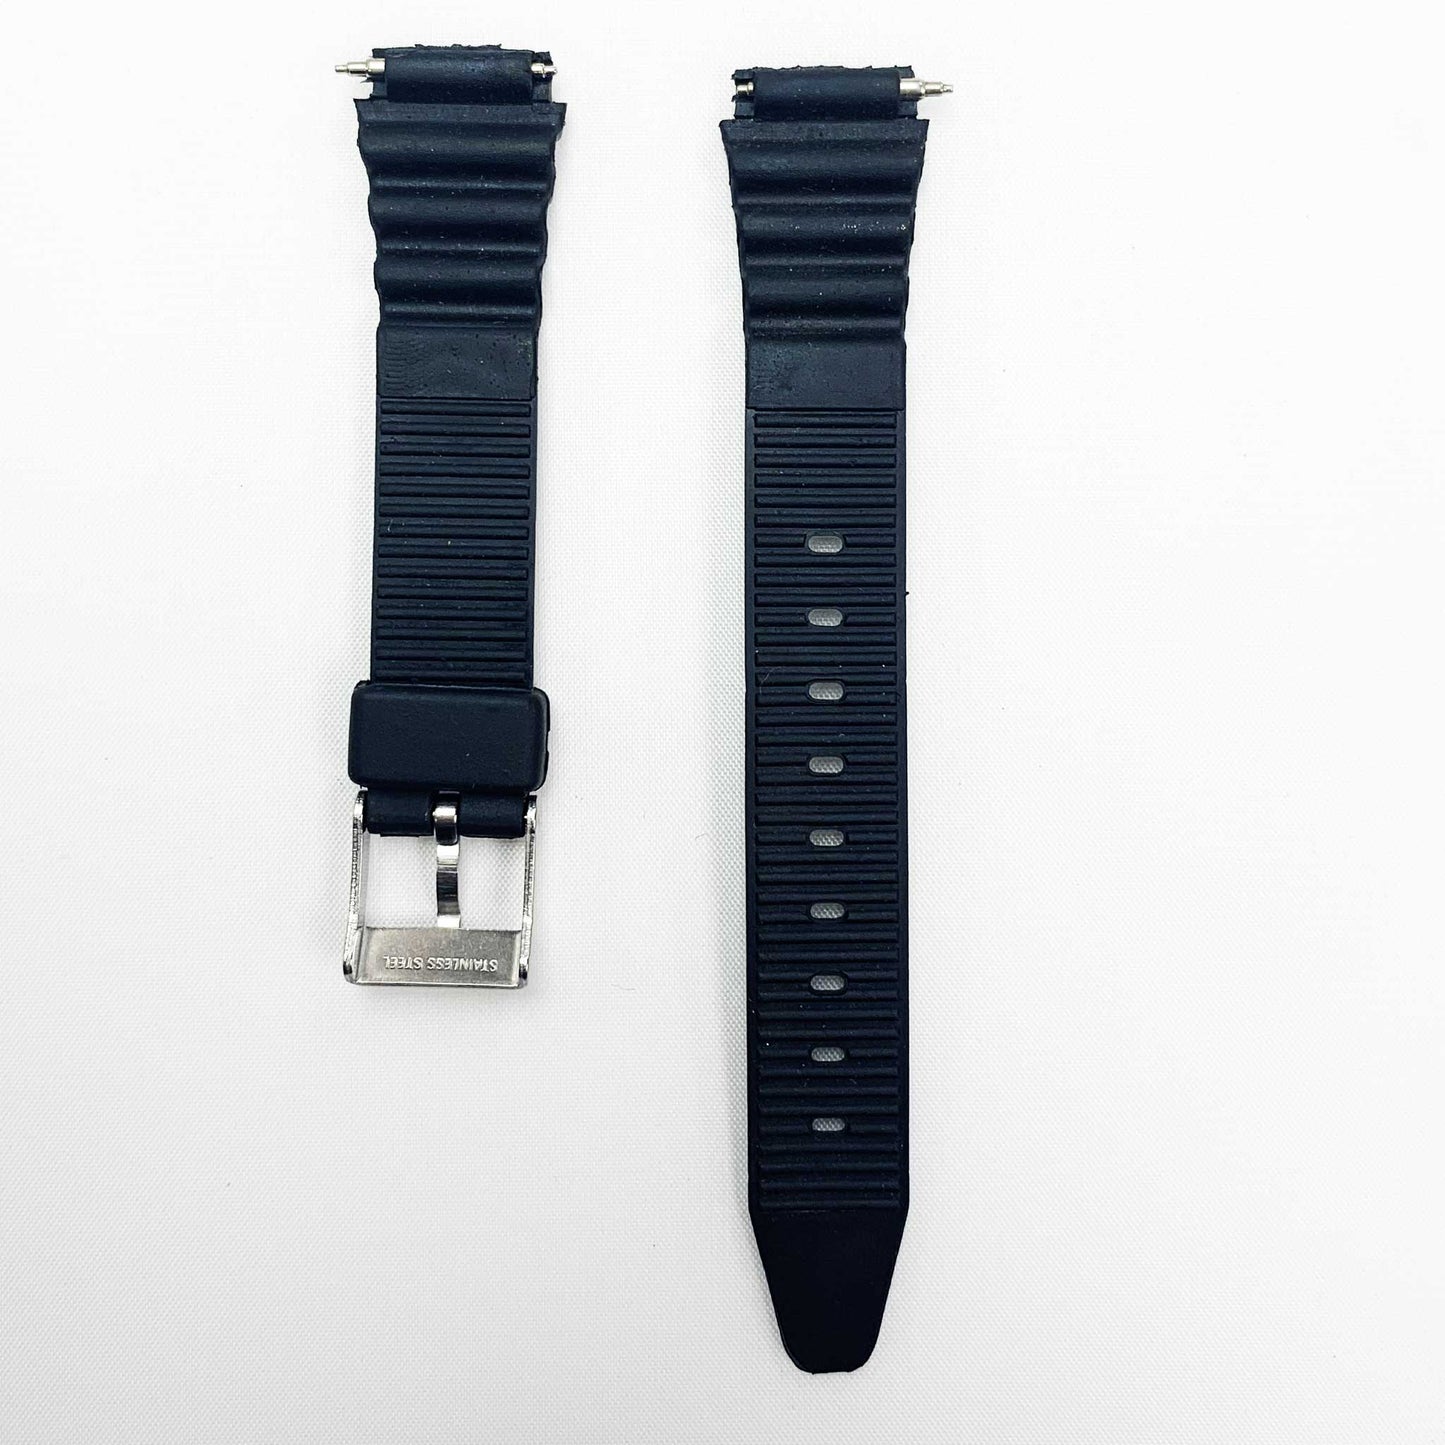 14mm pvc plastic watch band black kreisler sports for casio timex seiko citizen iron man watches